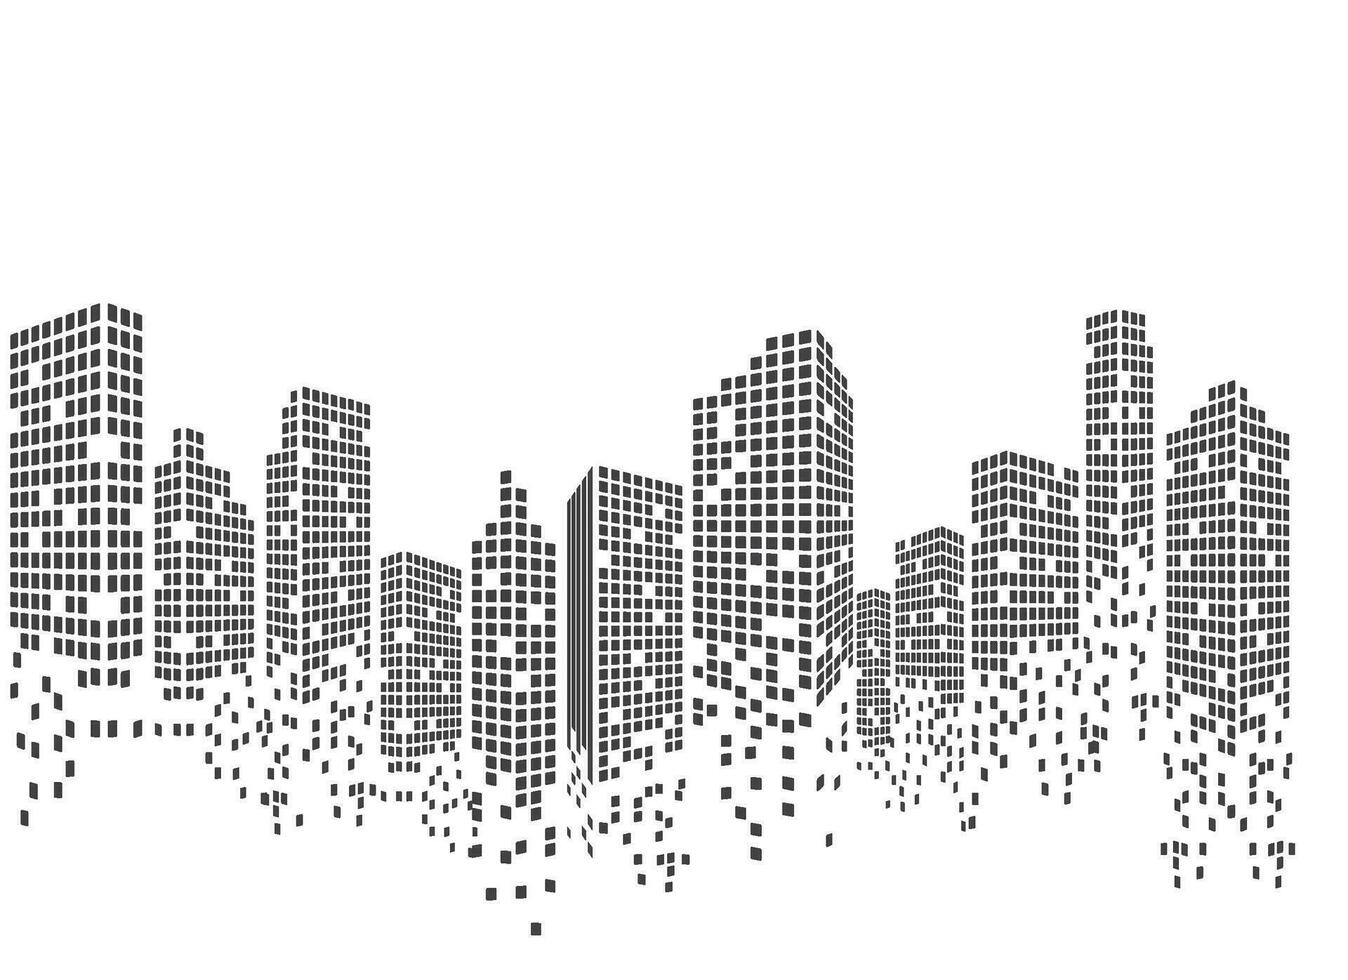 city skyline vector illustration